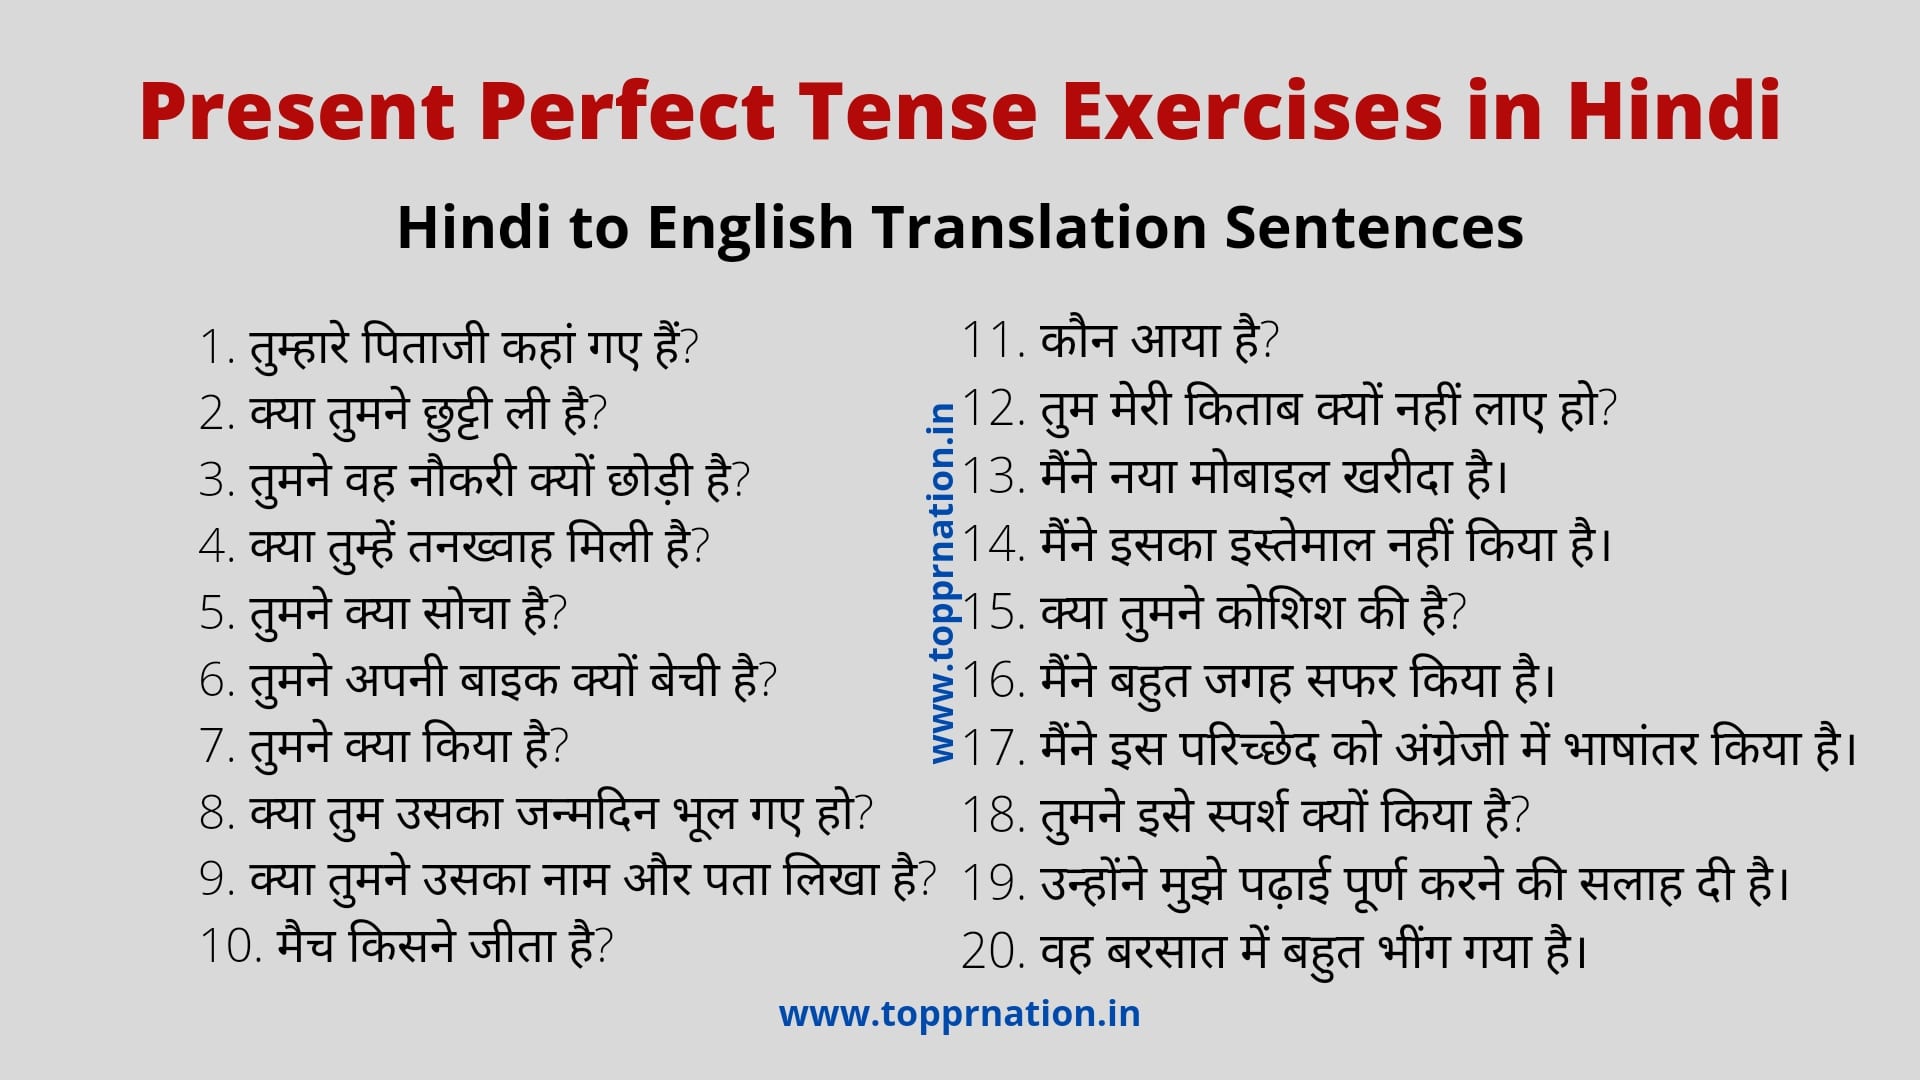 Present Perfect Tense Exercises in Hindi (Hindi to English Translation)